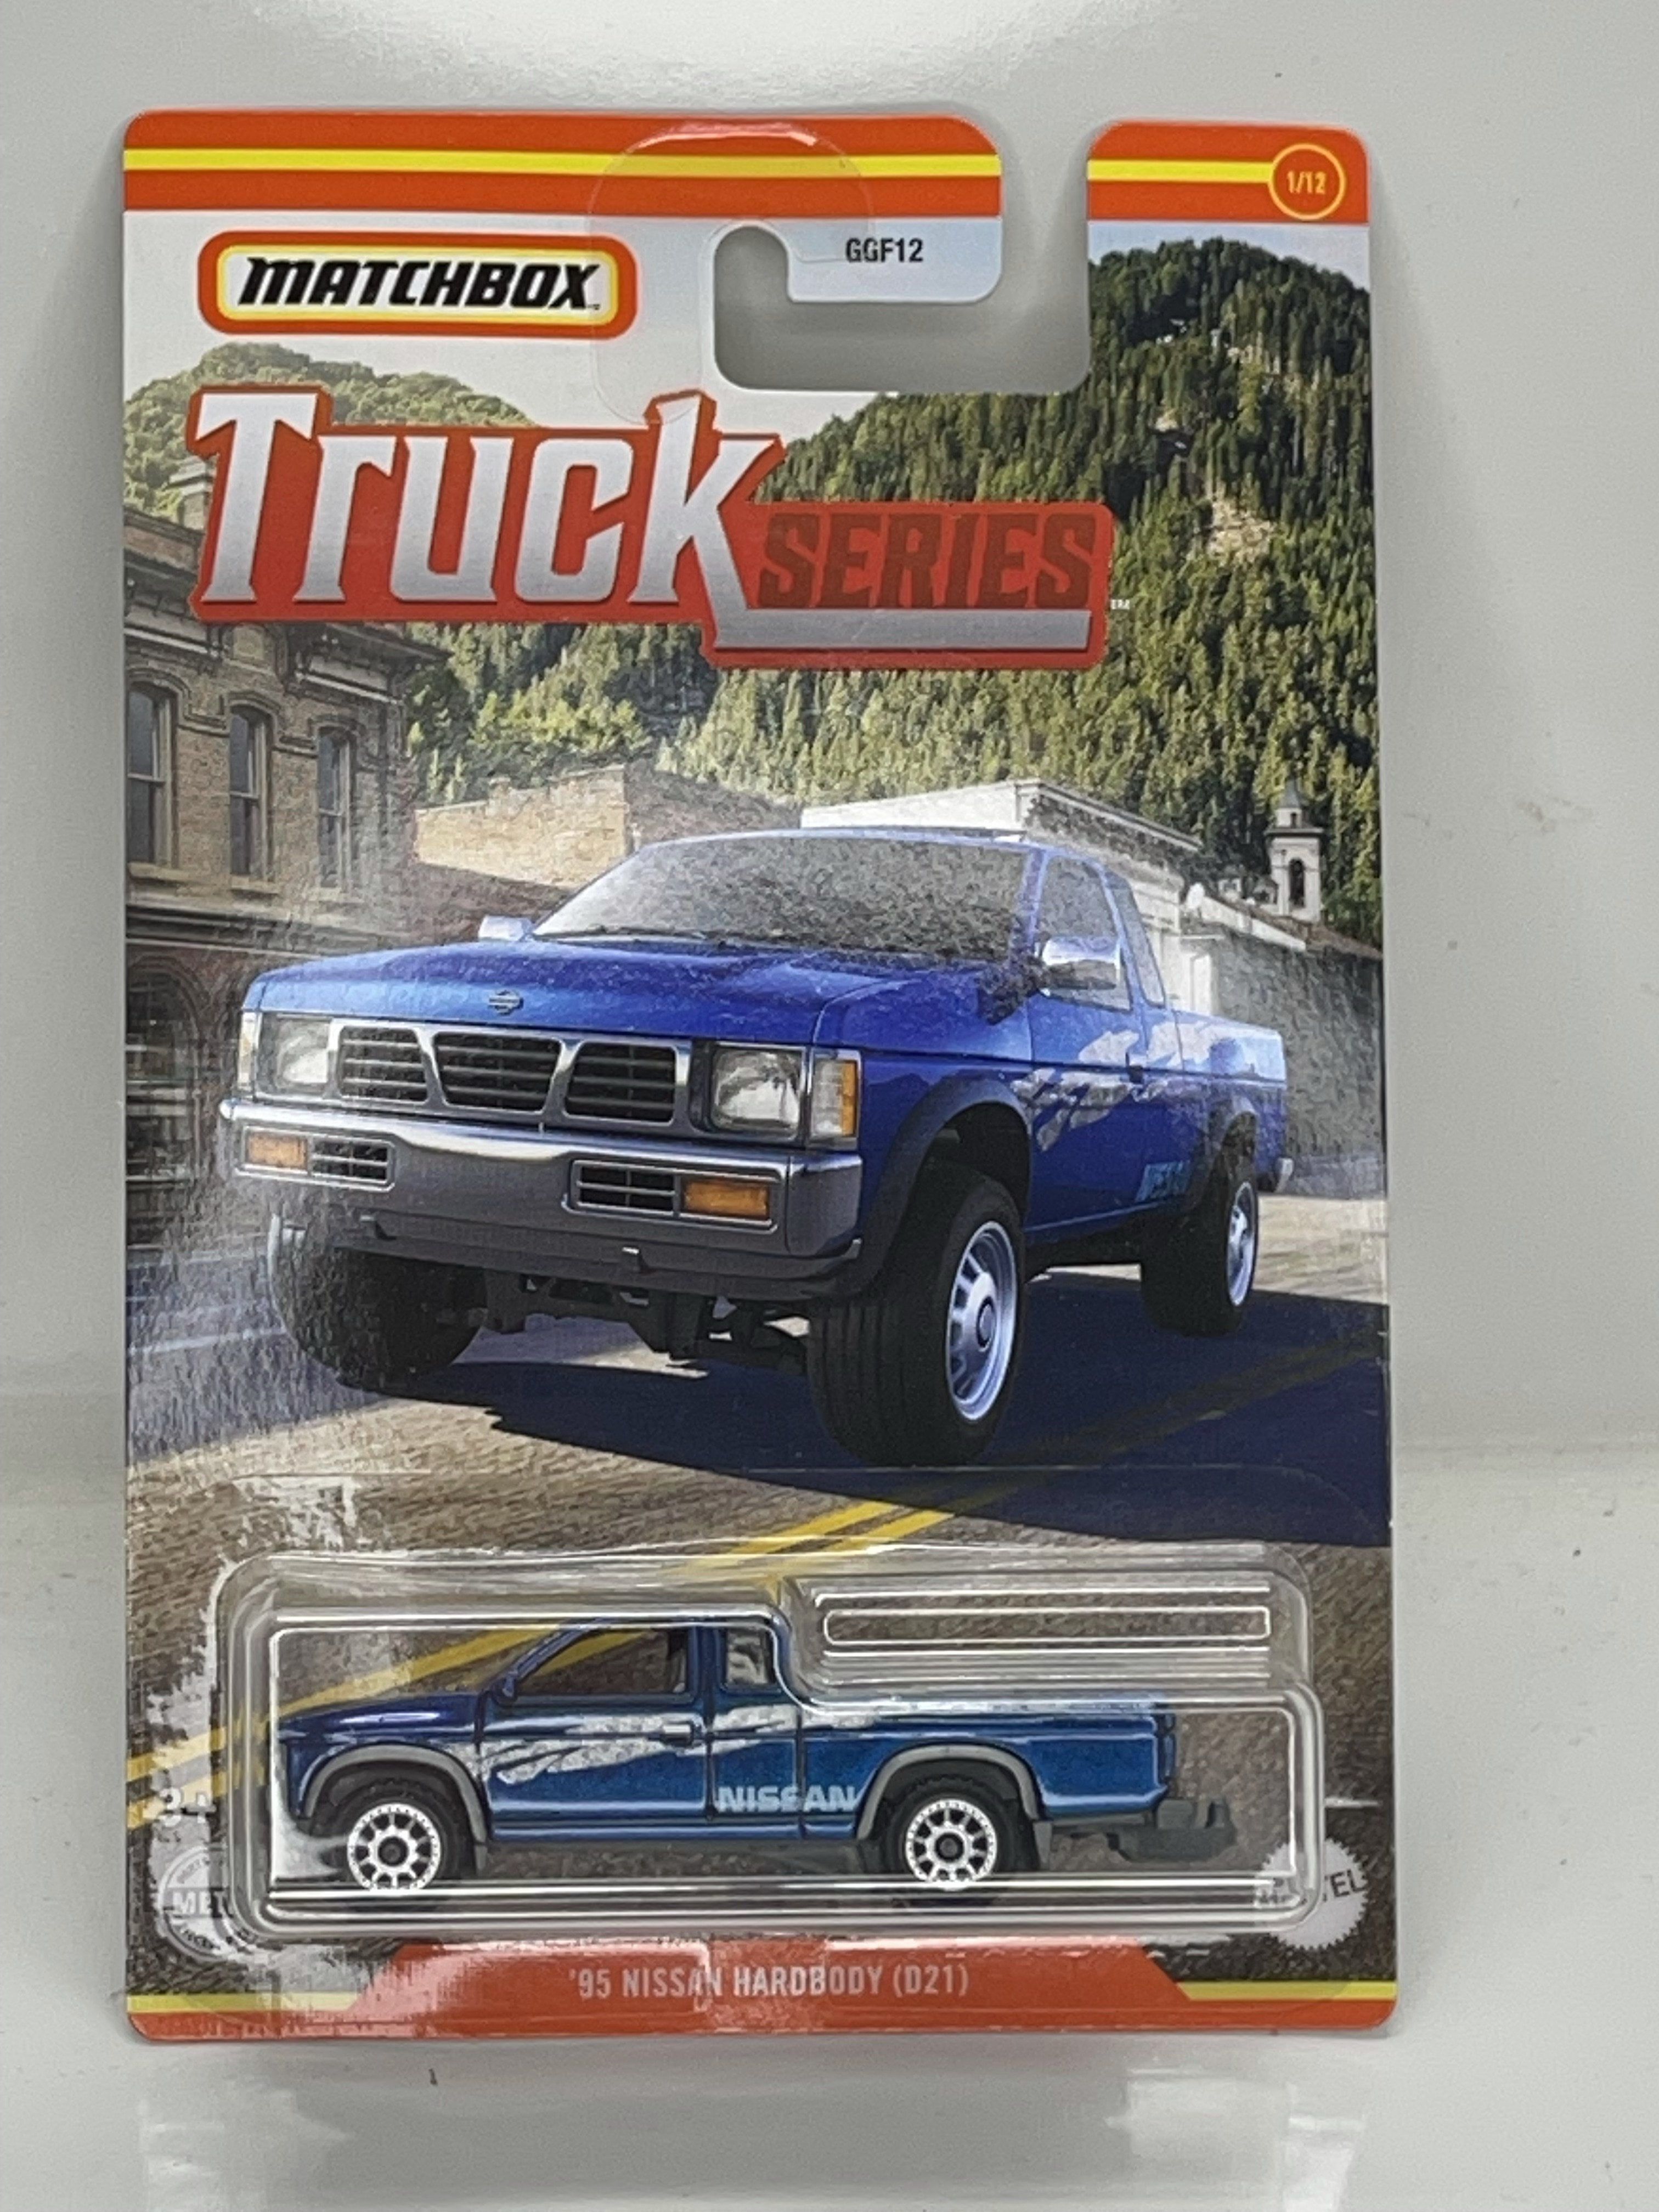 Matchbox Truck Series Blue 1995 Nissan Hardbody D21 Pickup for sale online